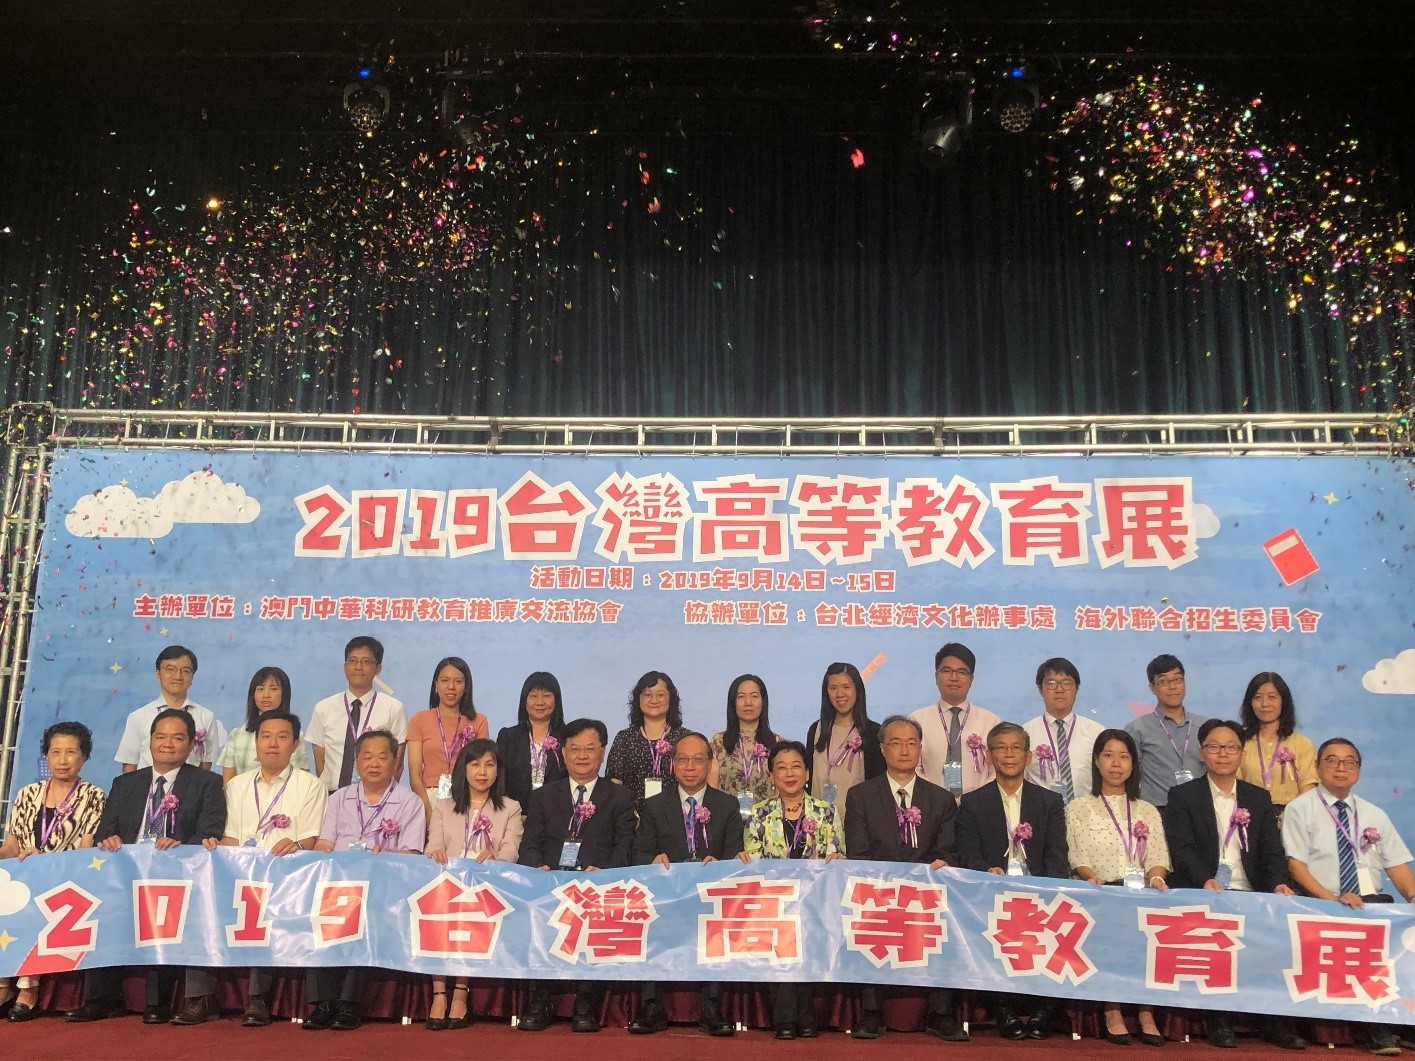 Taiwan Higher Education Exhibition in Macau 2019